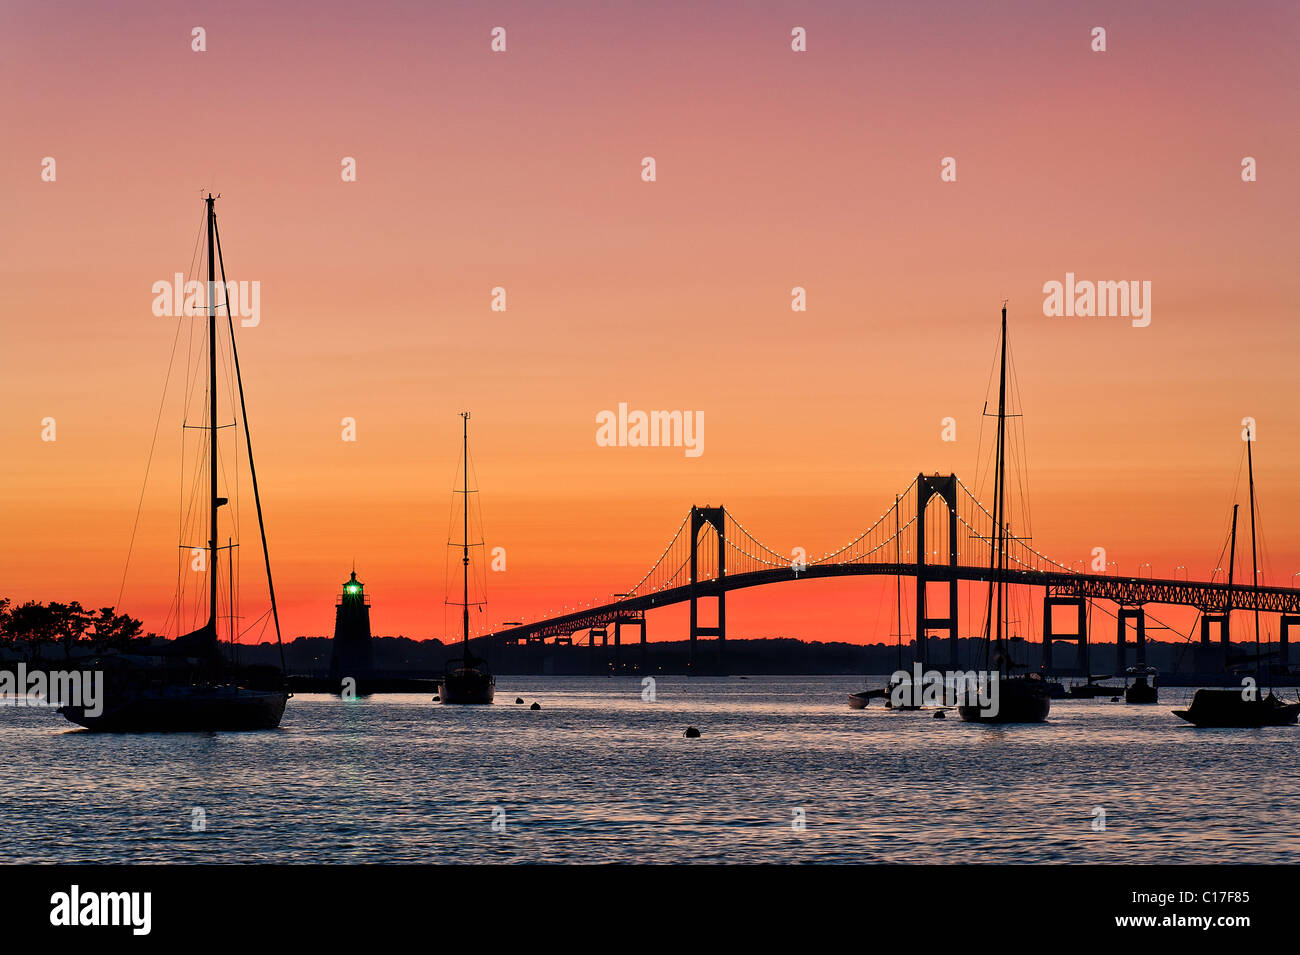 Goat Island lighthouse and the Jamestown or Pell Bridge at sunset, Newport, RI, Rhode Island Stock Photo